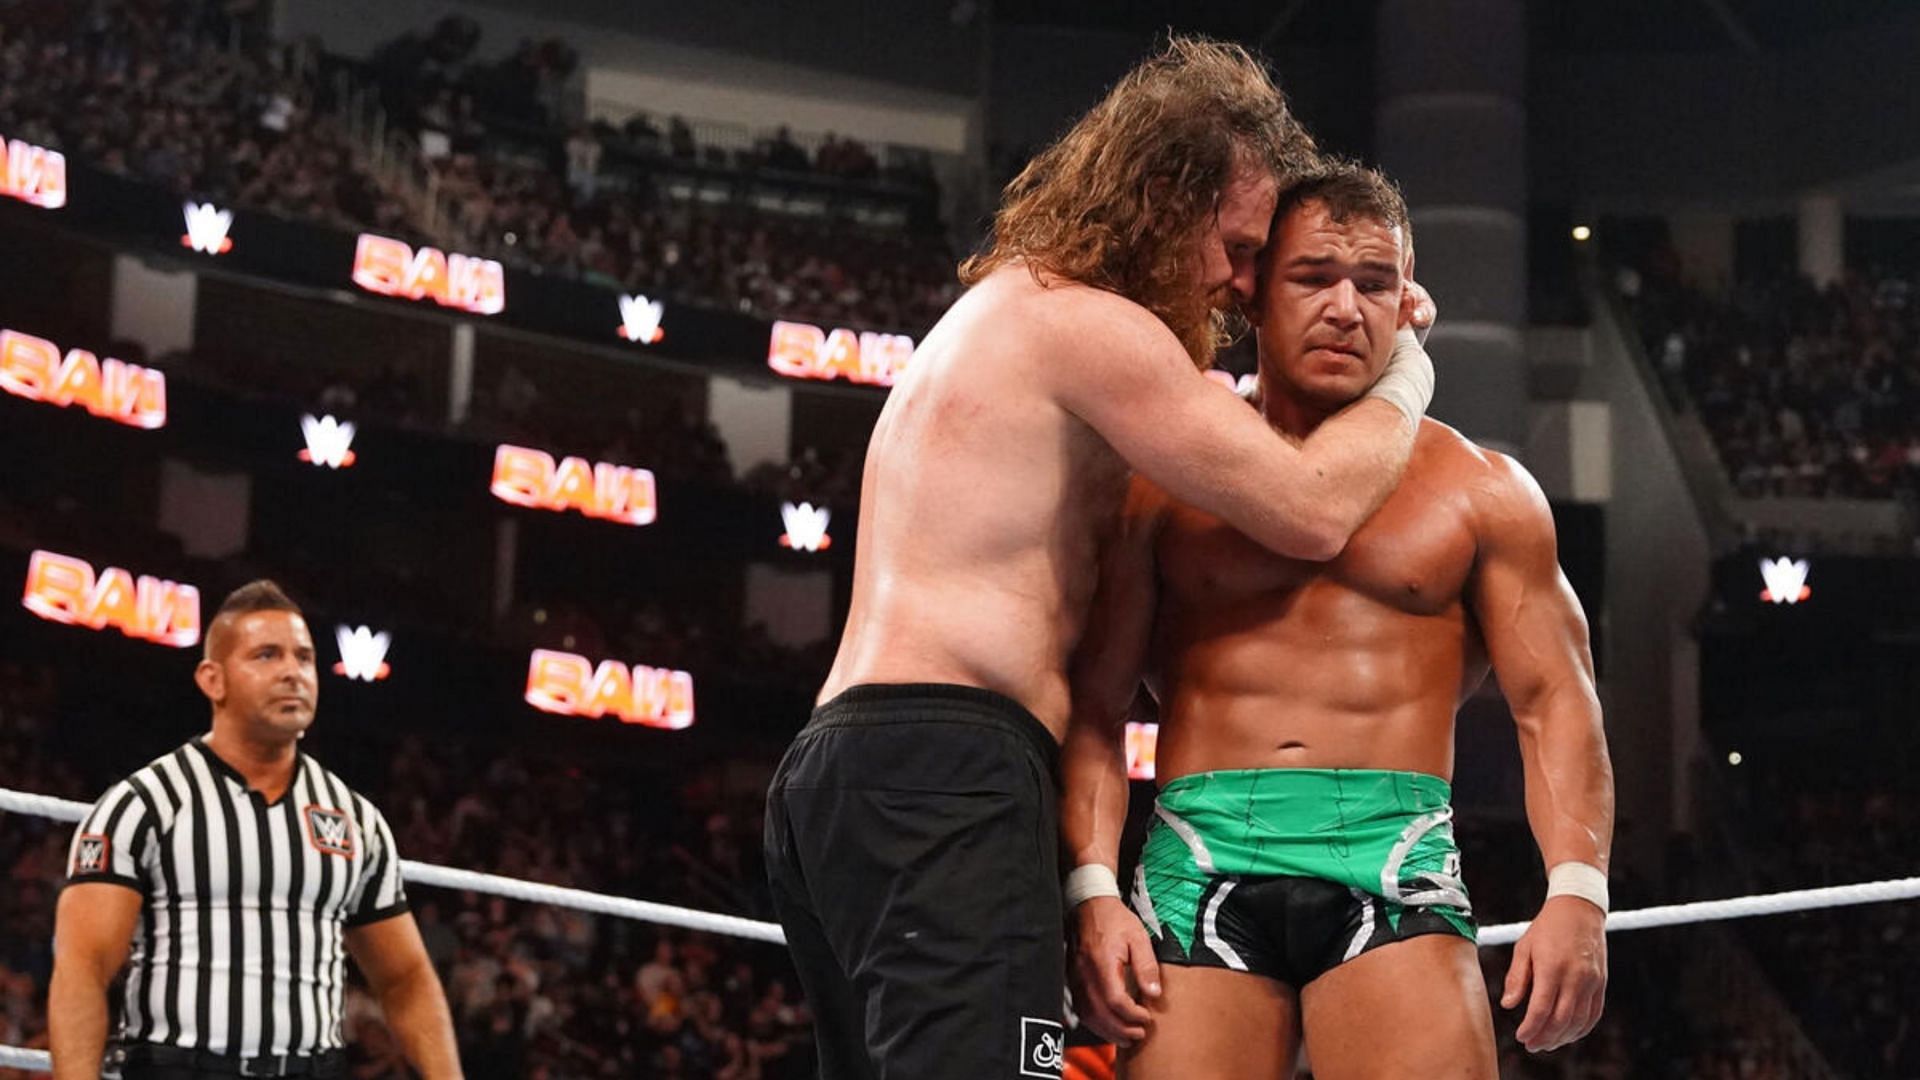 Sami Zayn will challenge Gunther at WWE WrestleMania XL